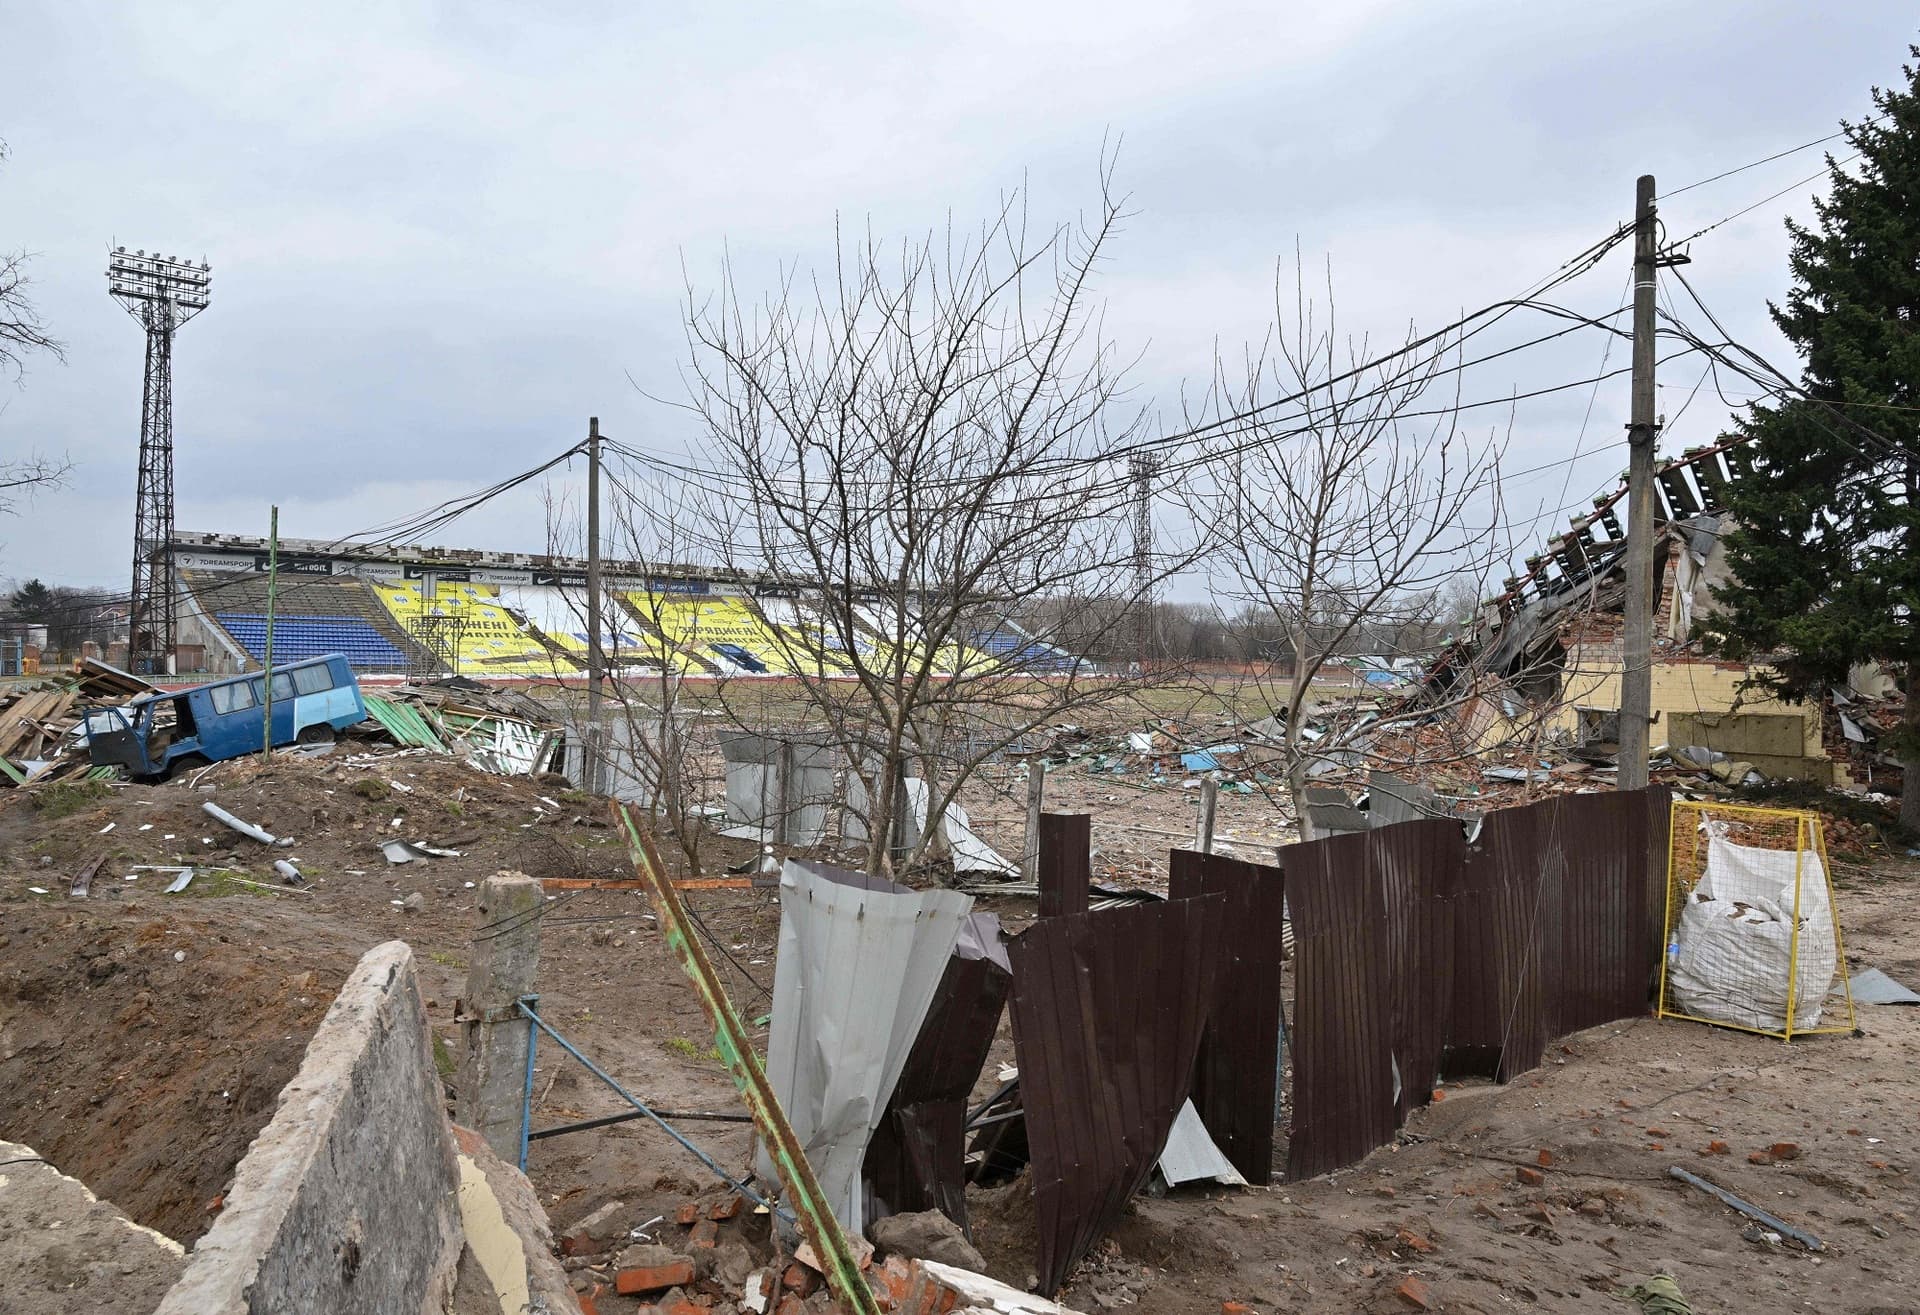 The Chernihiv stadium wrecked by Russian attacks